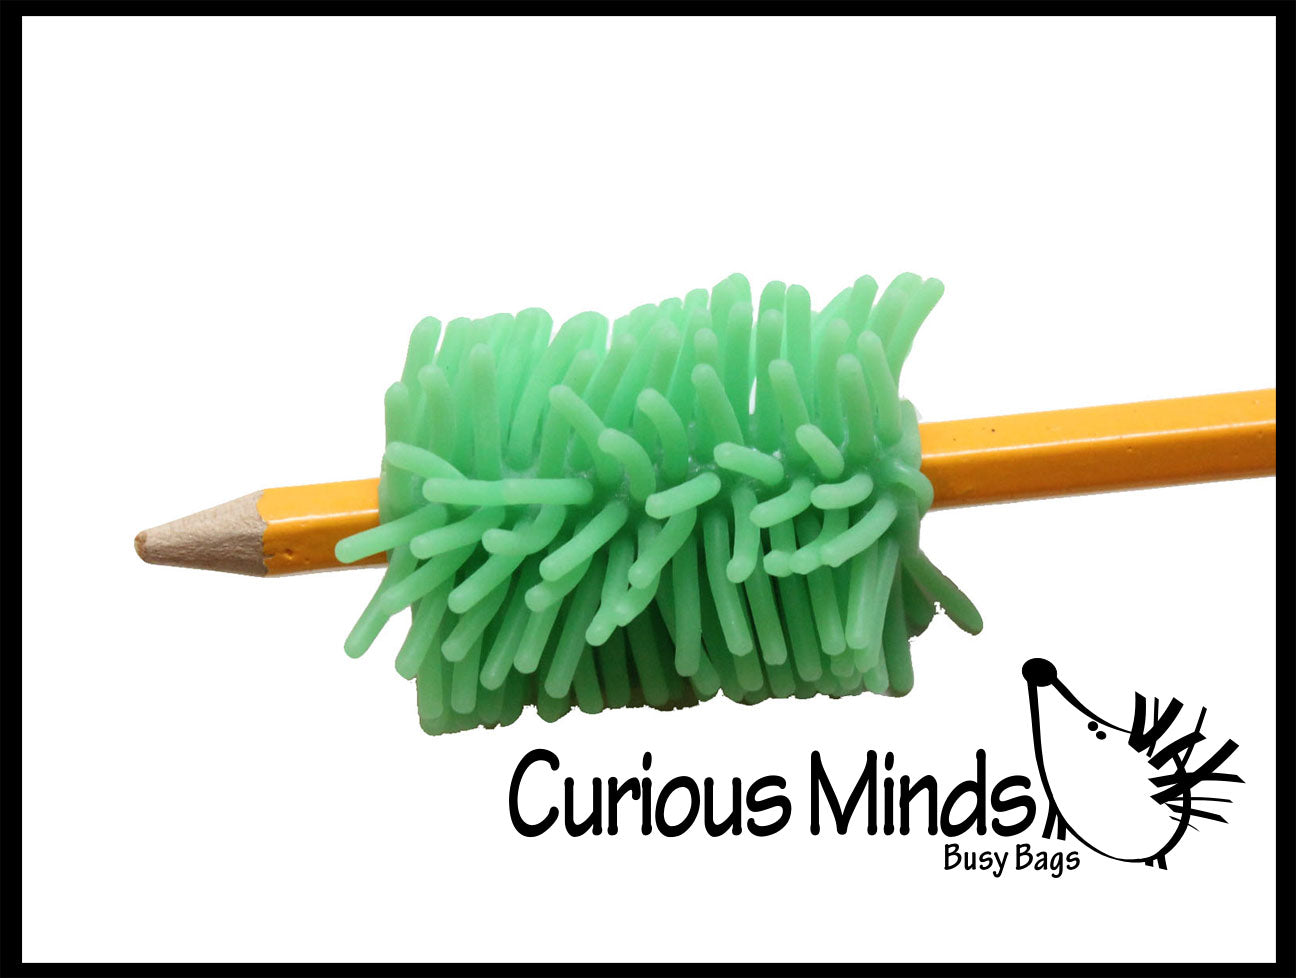 Jumbo Soft Puffer Pencil Grip - Sensory School Supply or Prize